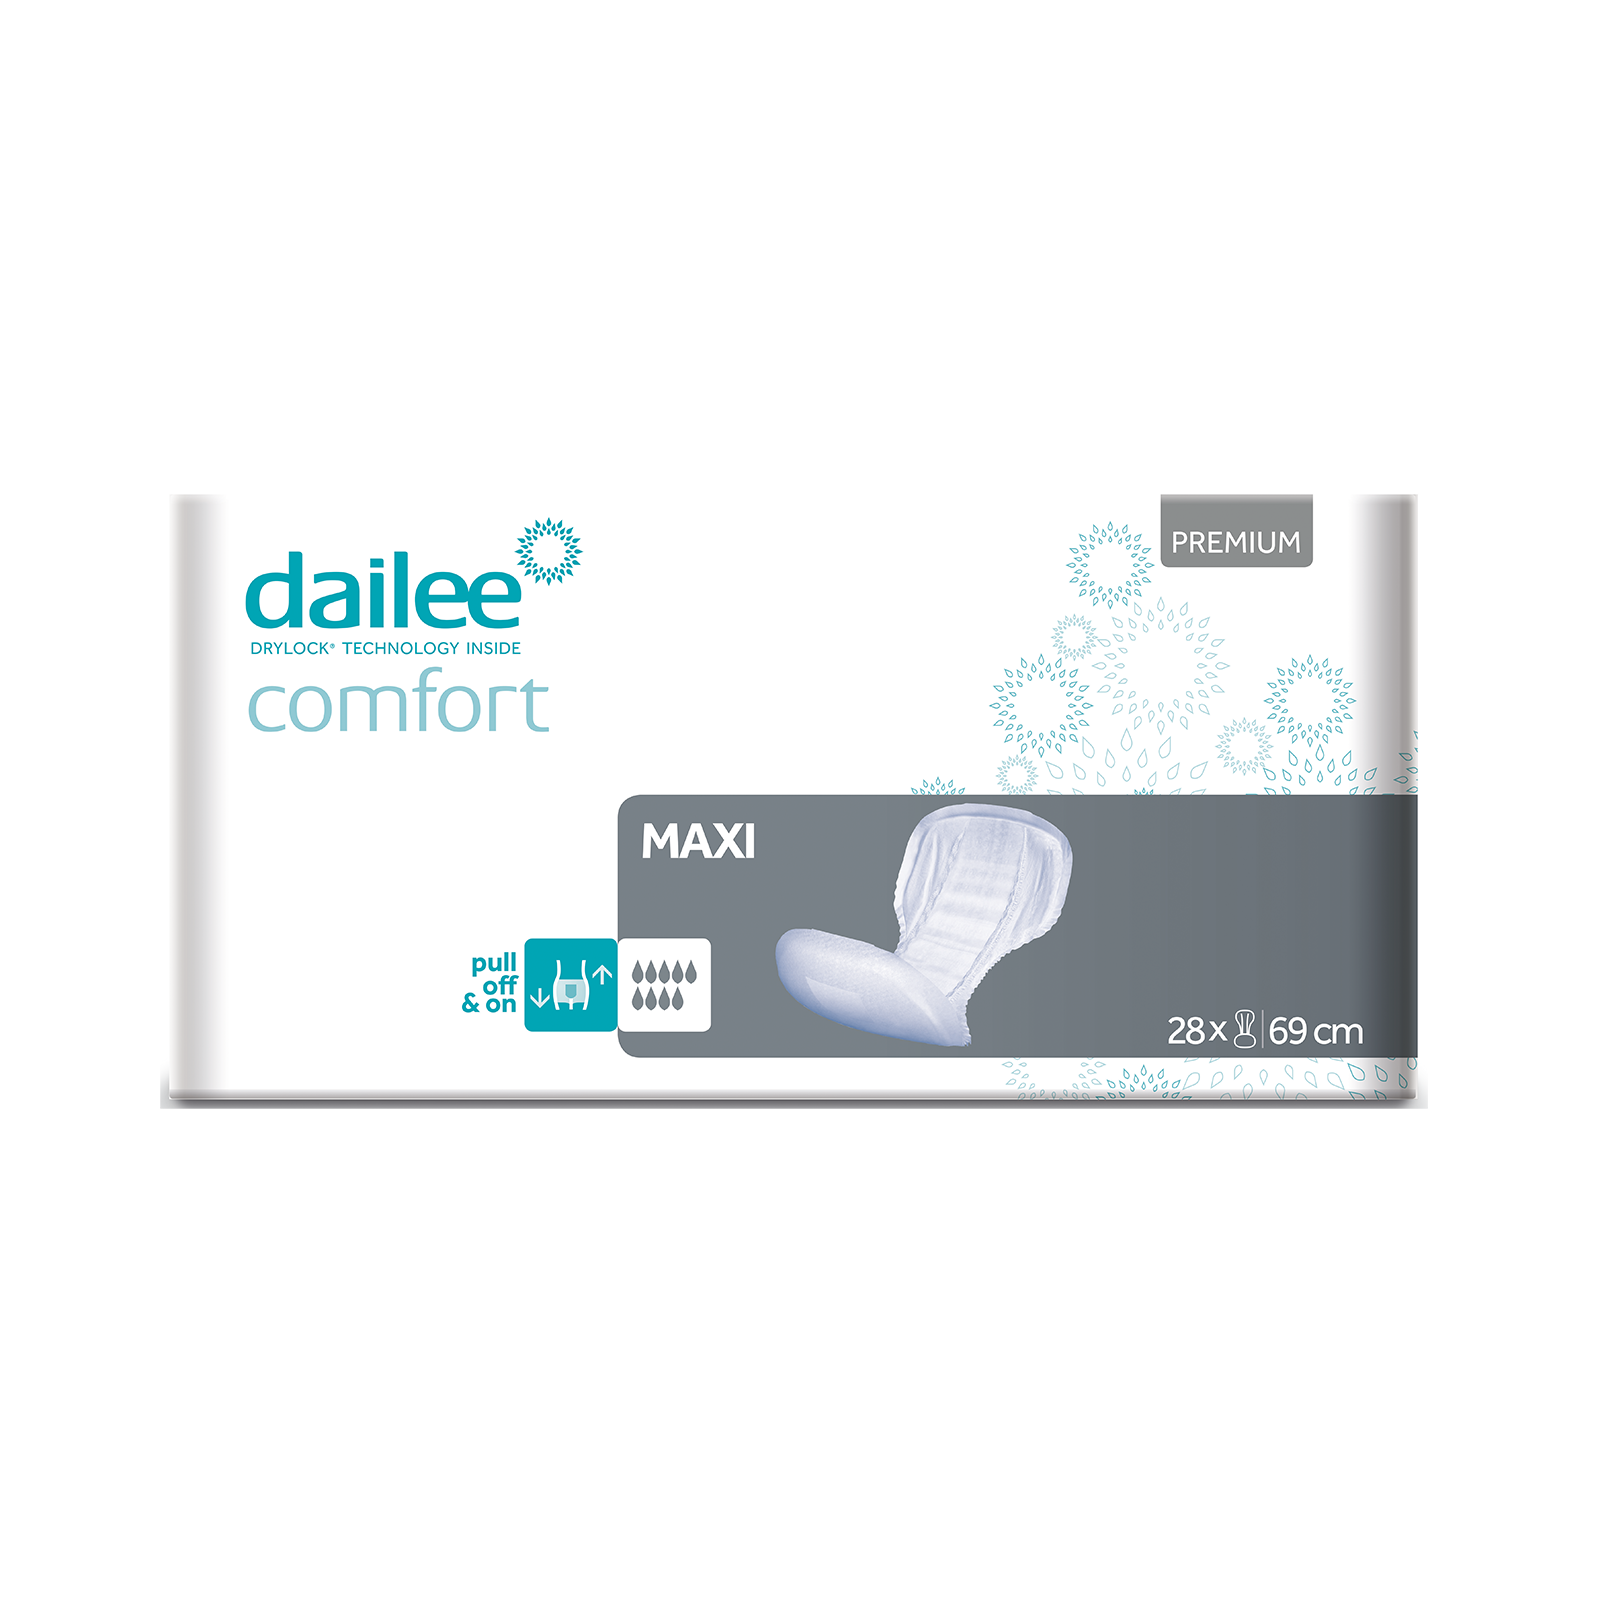 dailee_premium_comfort_maxi_thumb